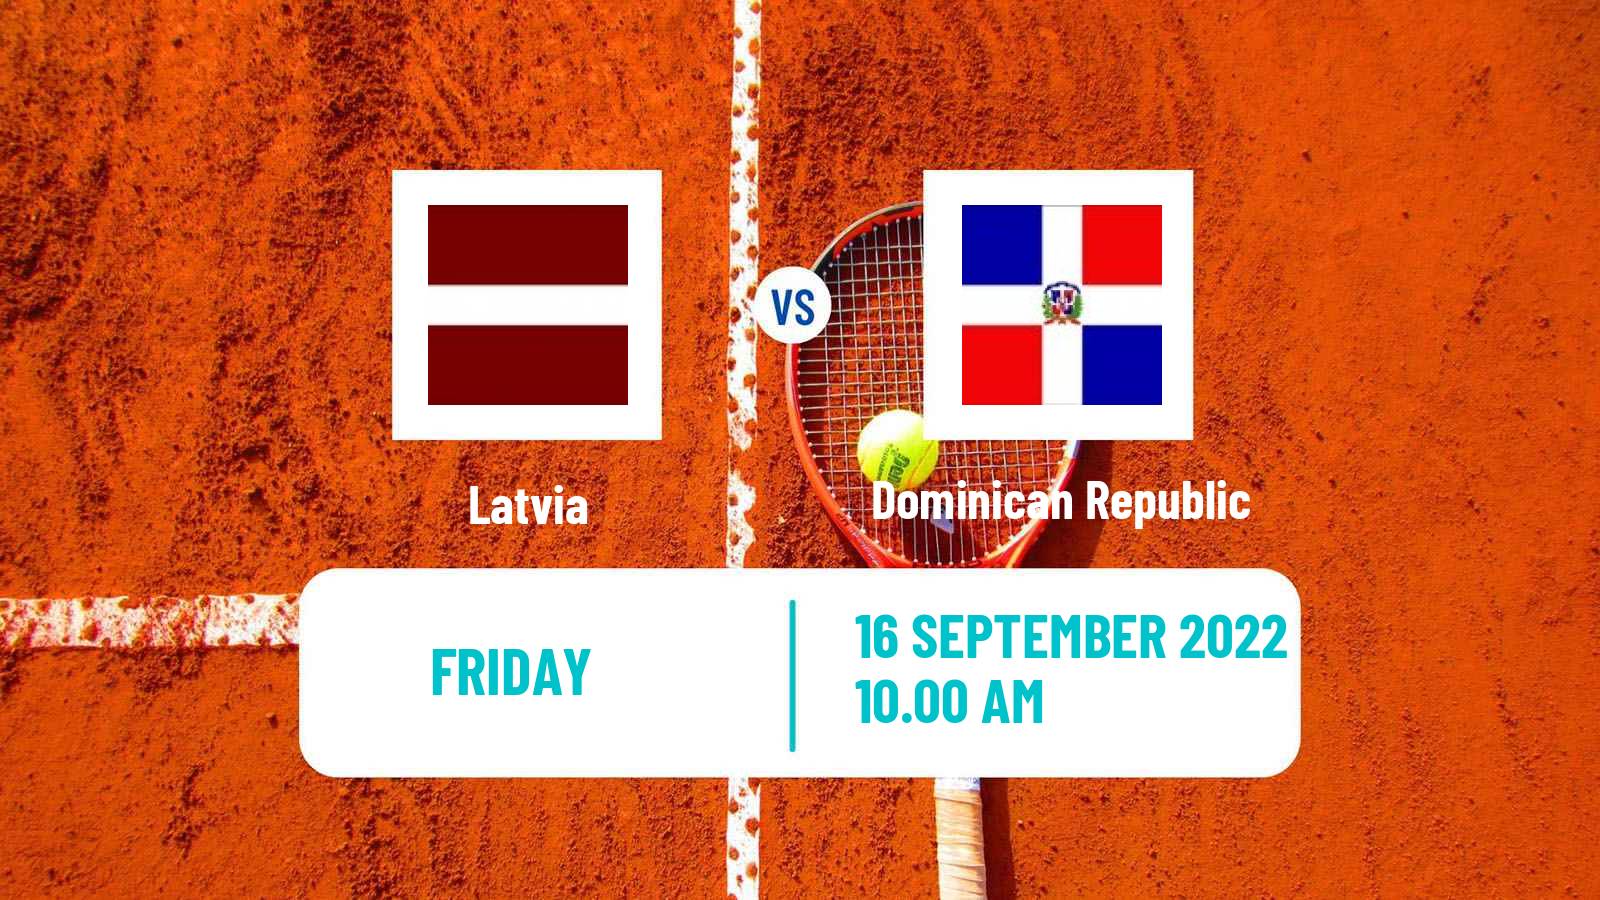 Tennis Davis Cup World Group II Teams Latvia - Dominican Republic